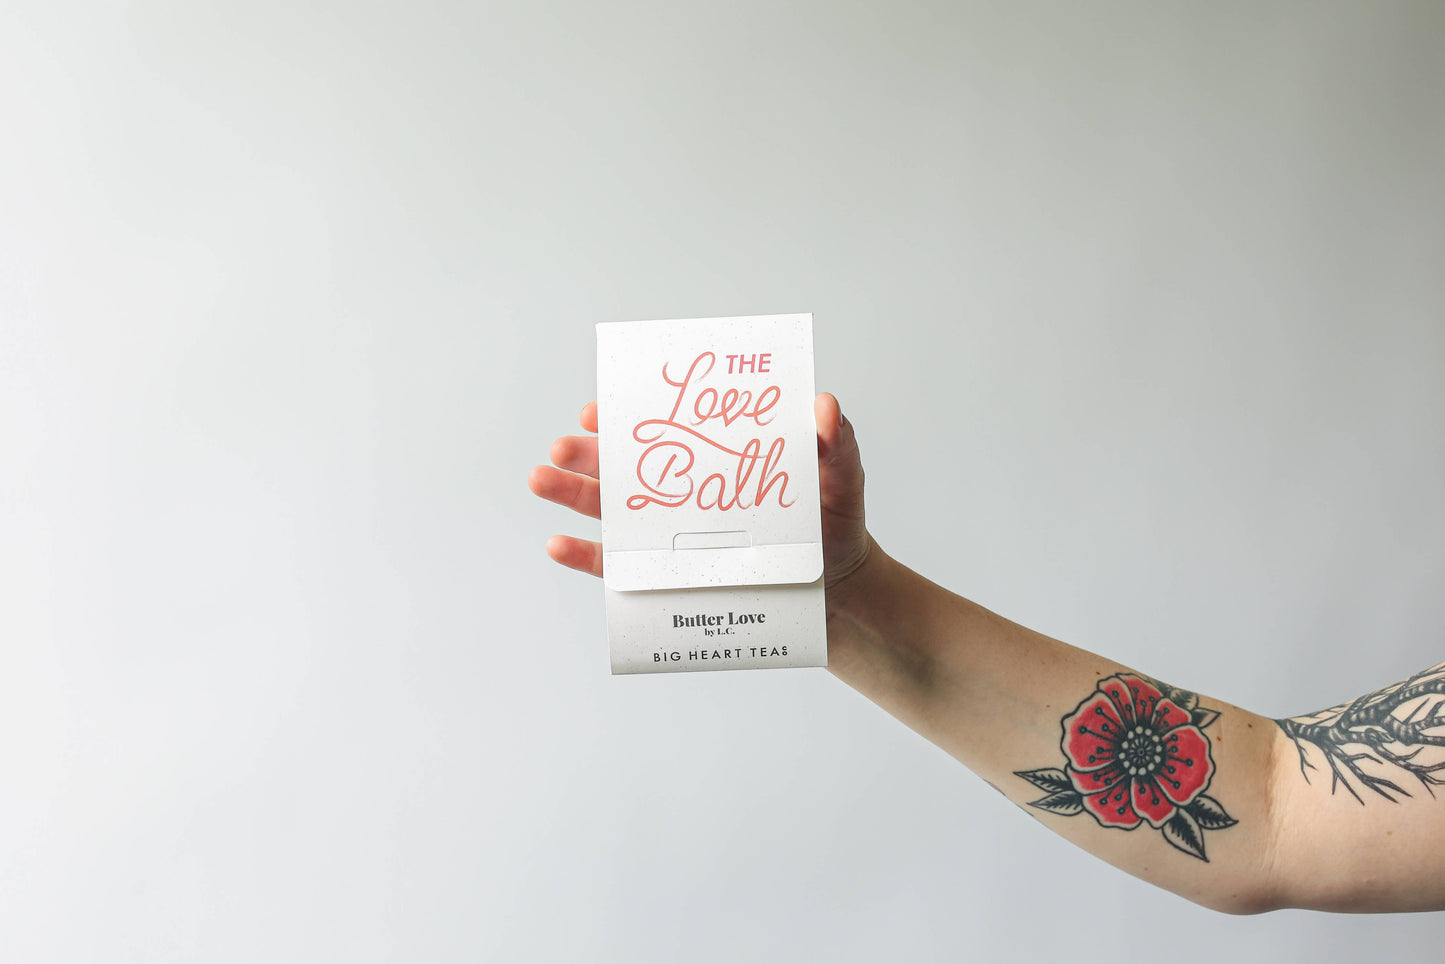 Love Bath by Big Heart Tea